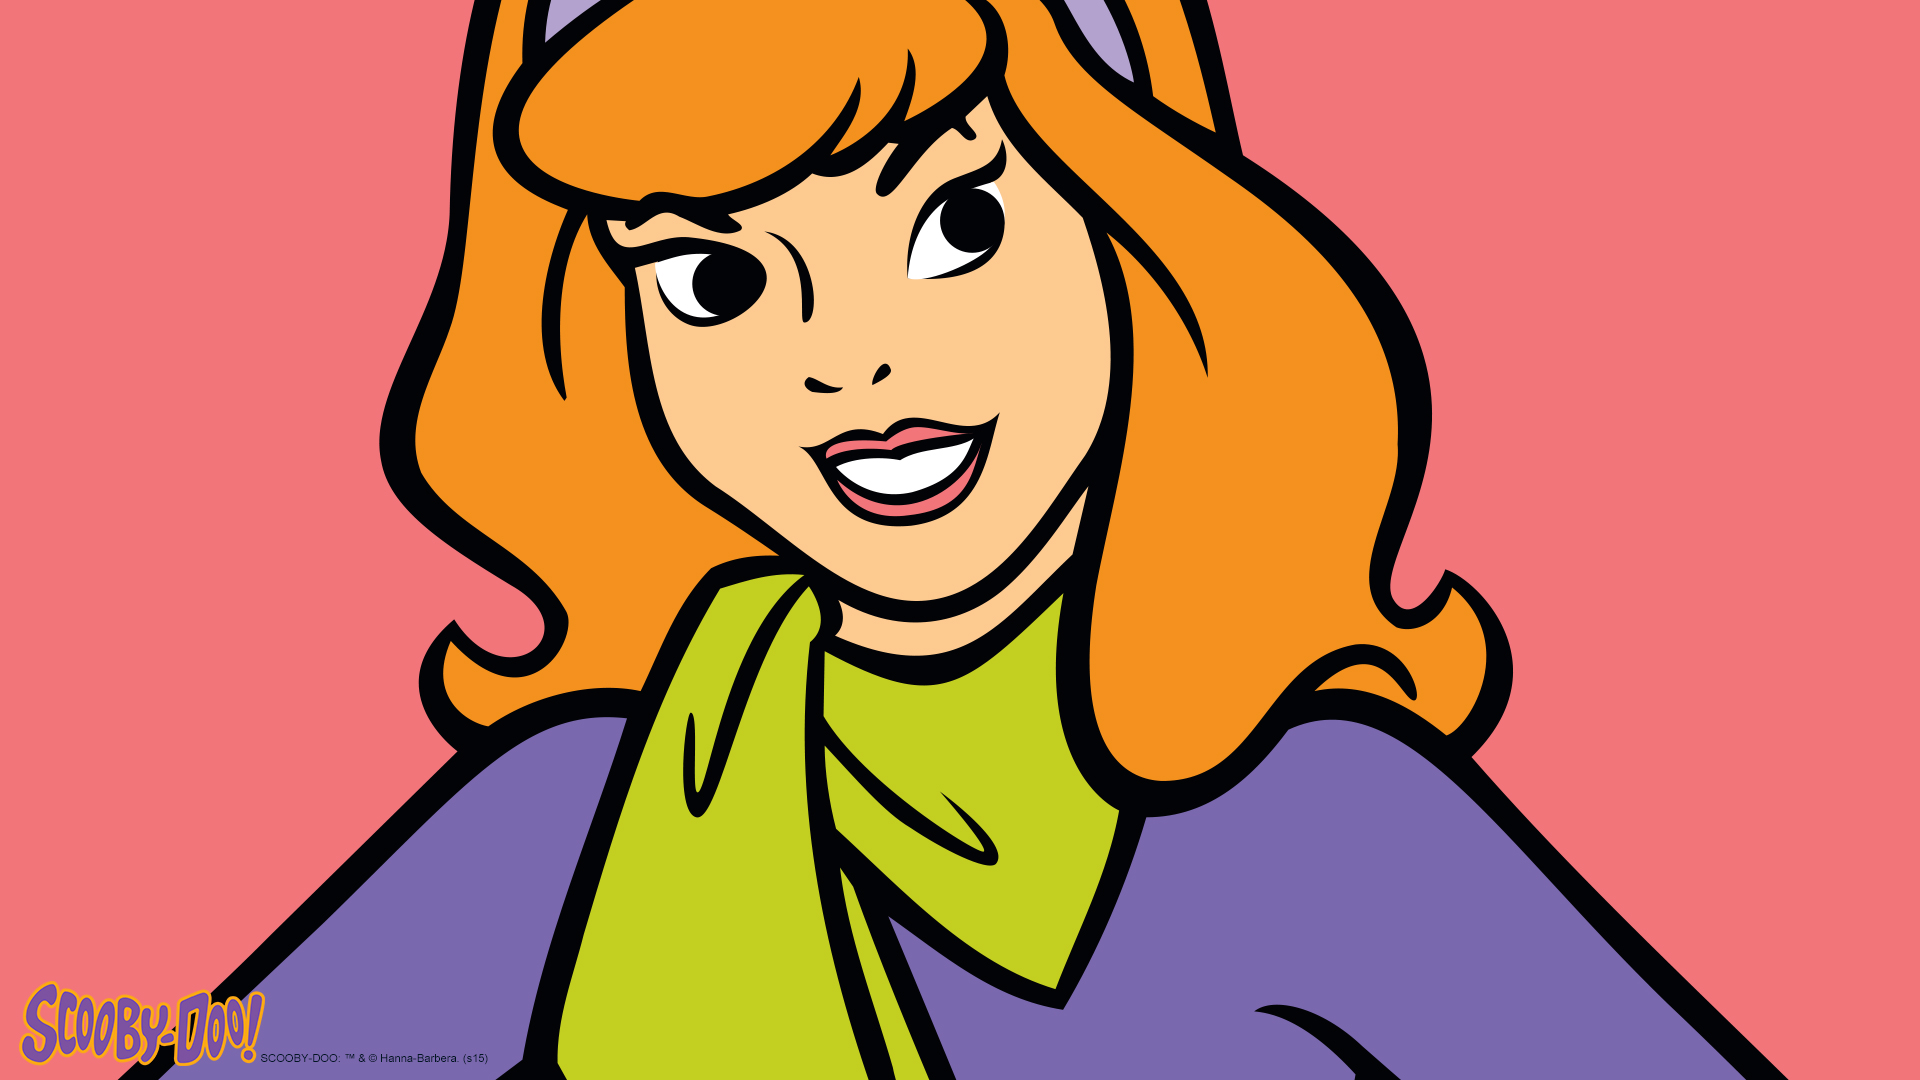 Daphne Scooby Doo वॉलपेपर 38561835 फैन्पॉप Page 5 